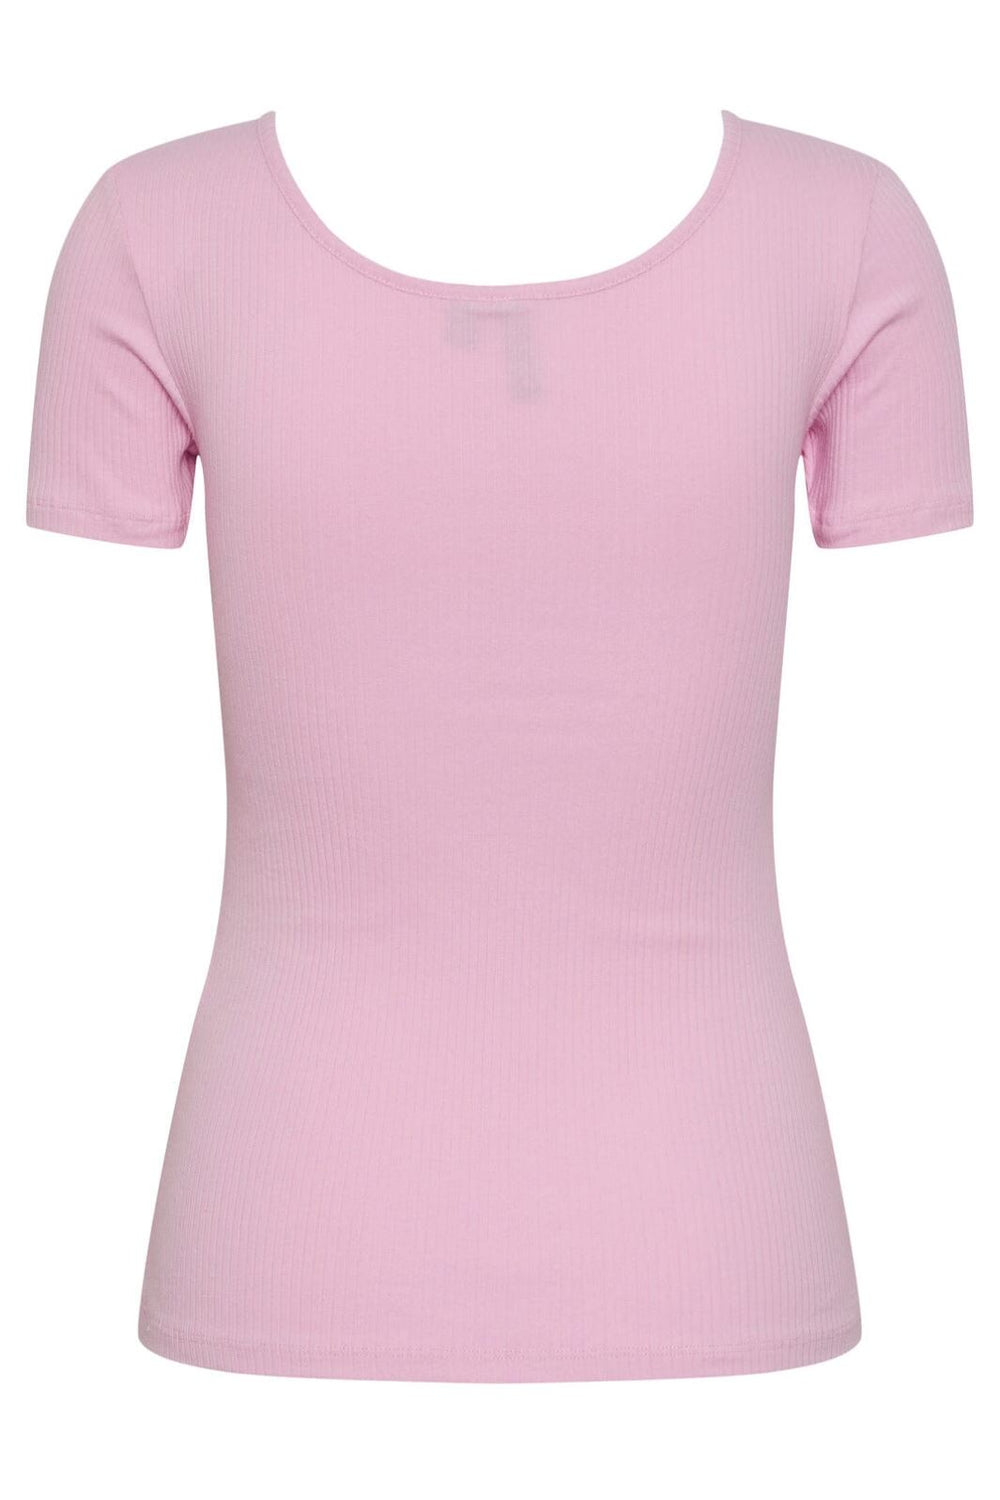 Pieces - Pckitte Ss Top - 4385199 Pastel Lavender T-shirts 